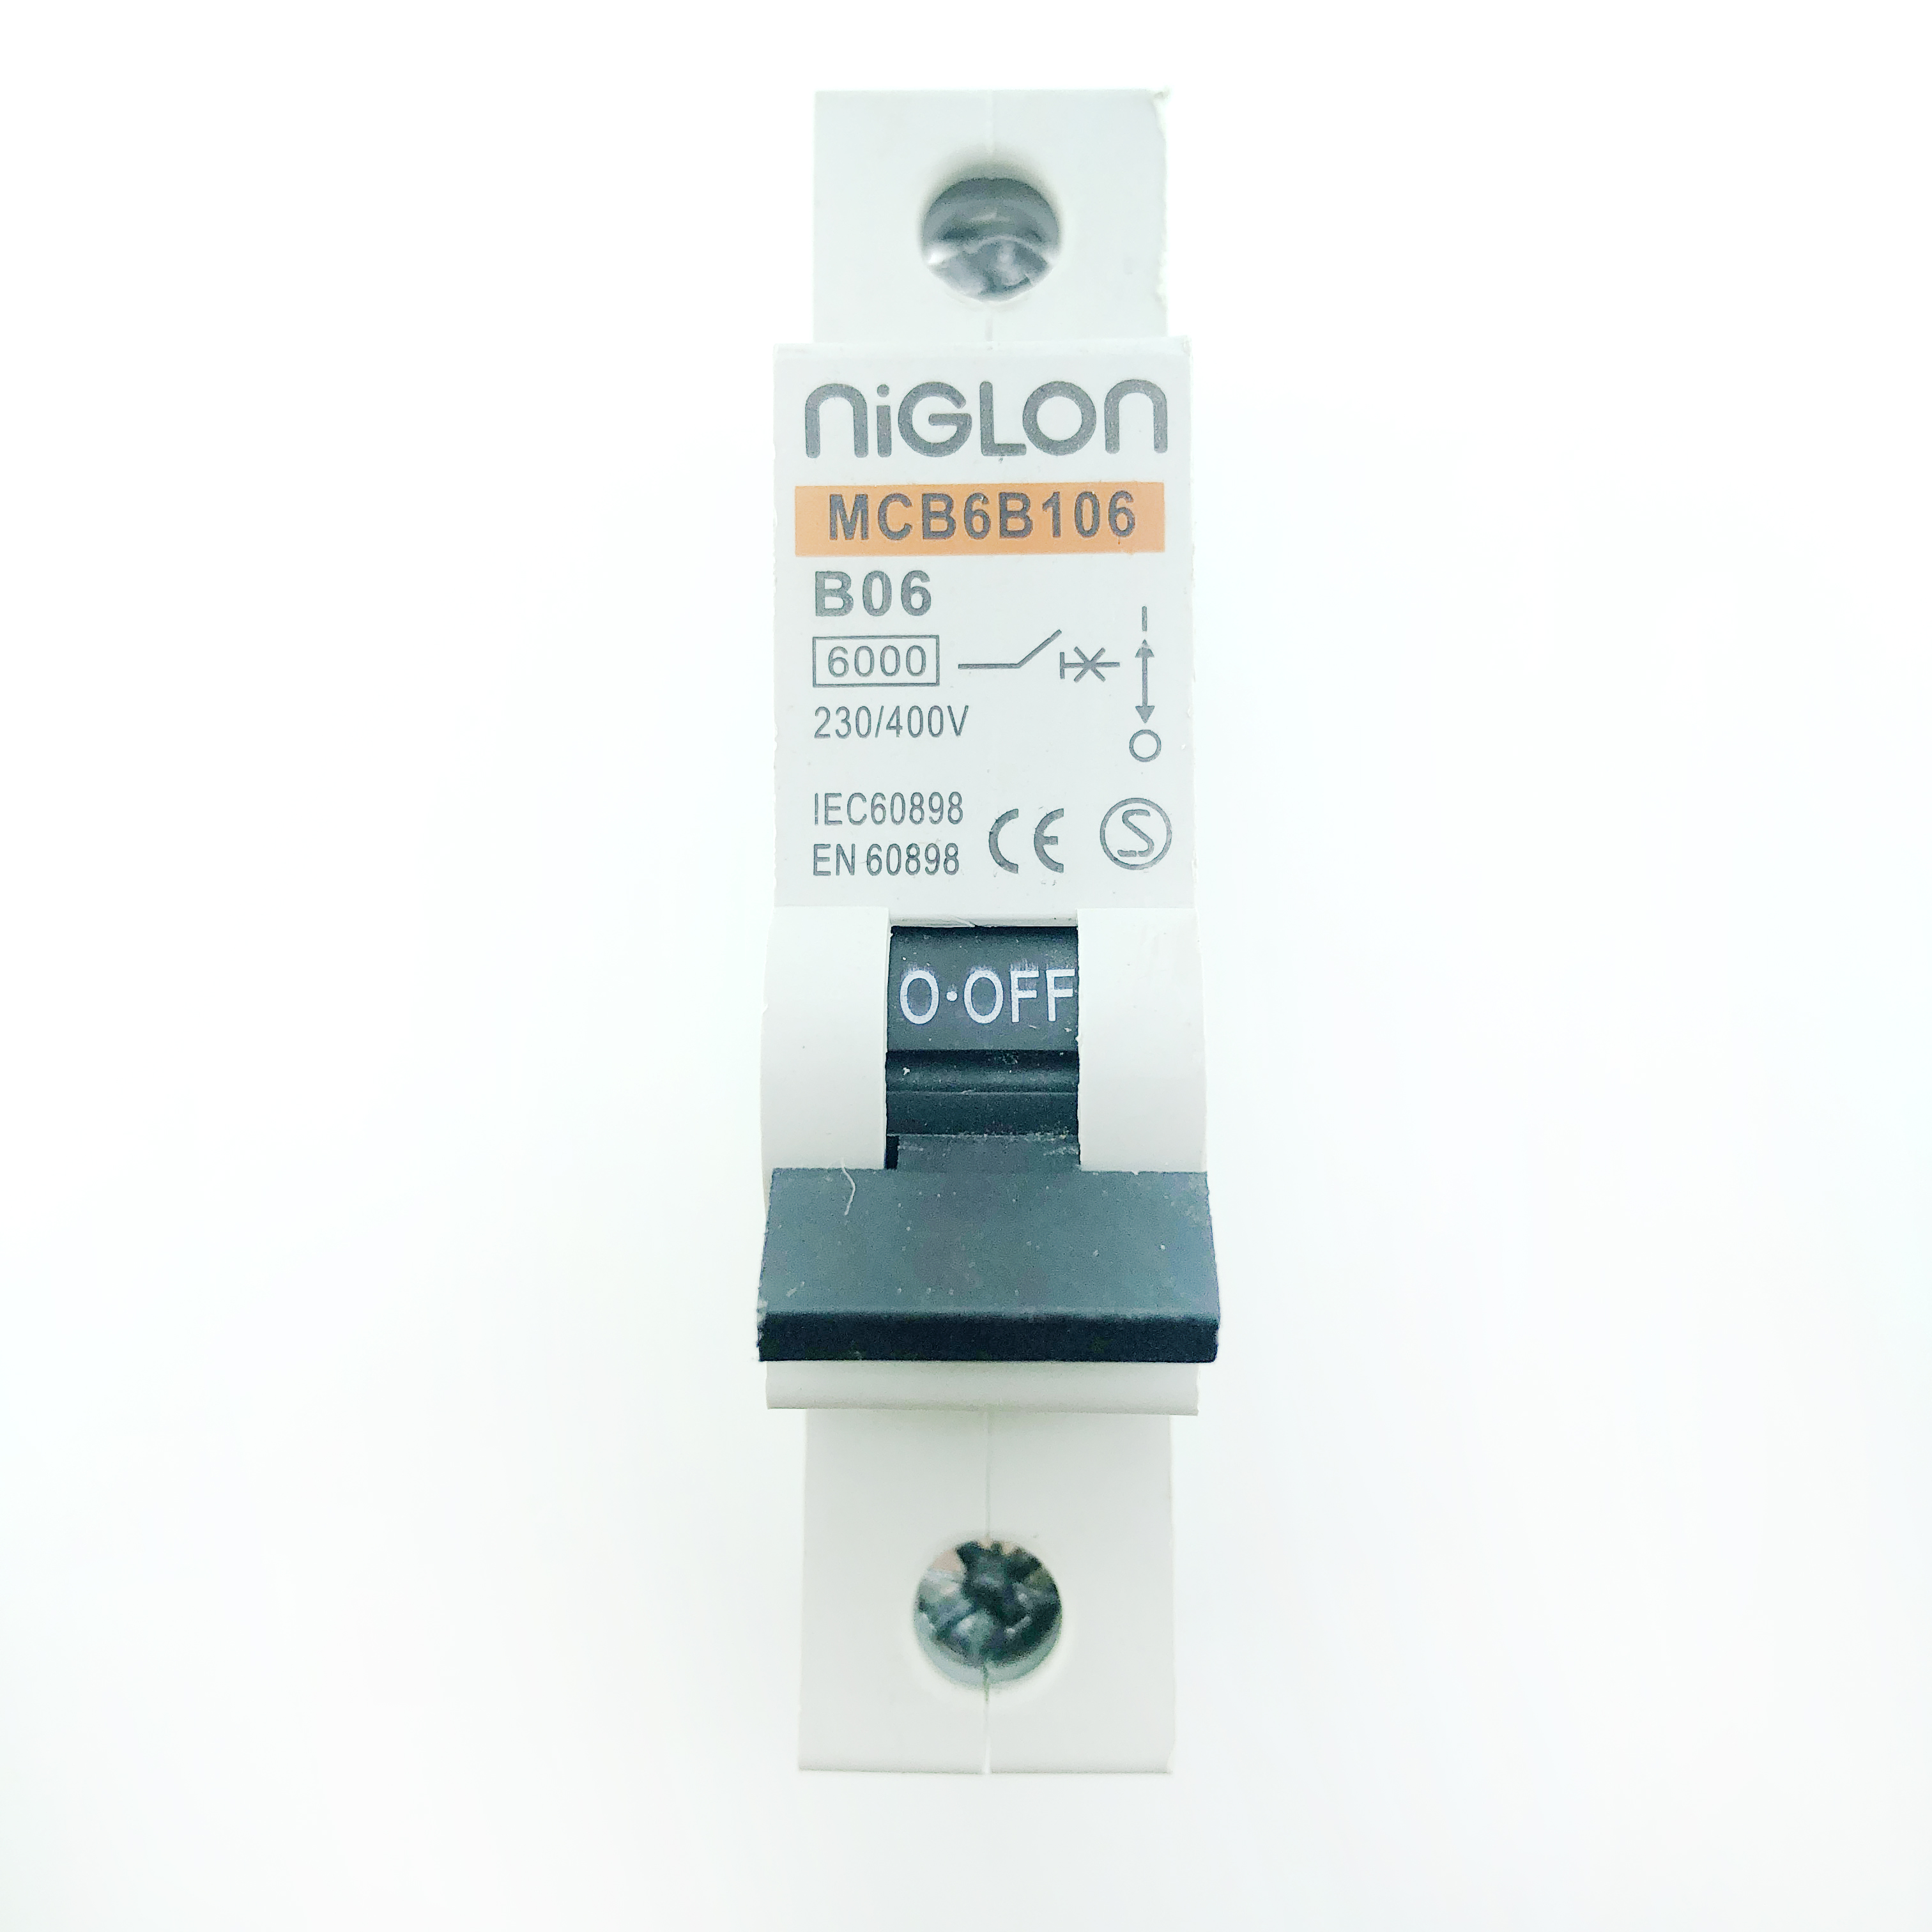 Niglon MCB6B106 B6 6A MCB 